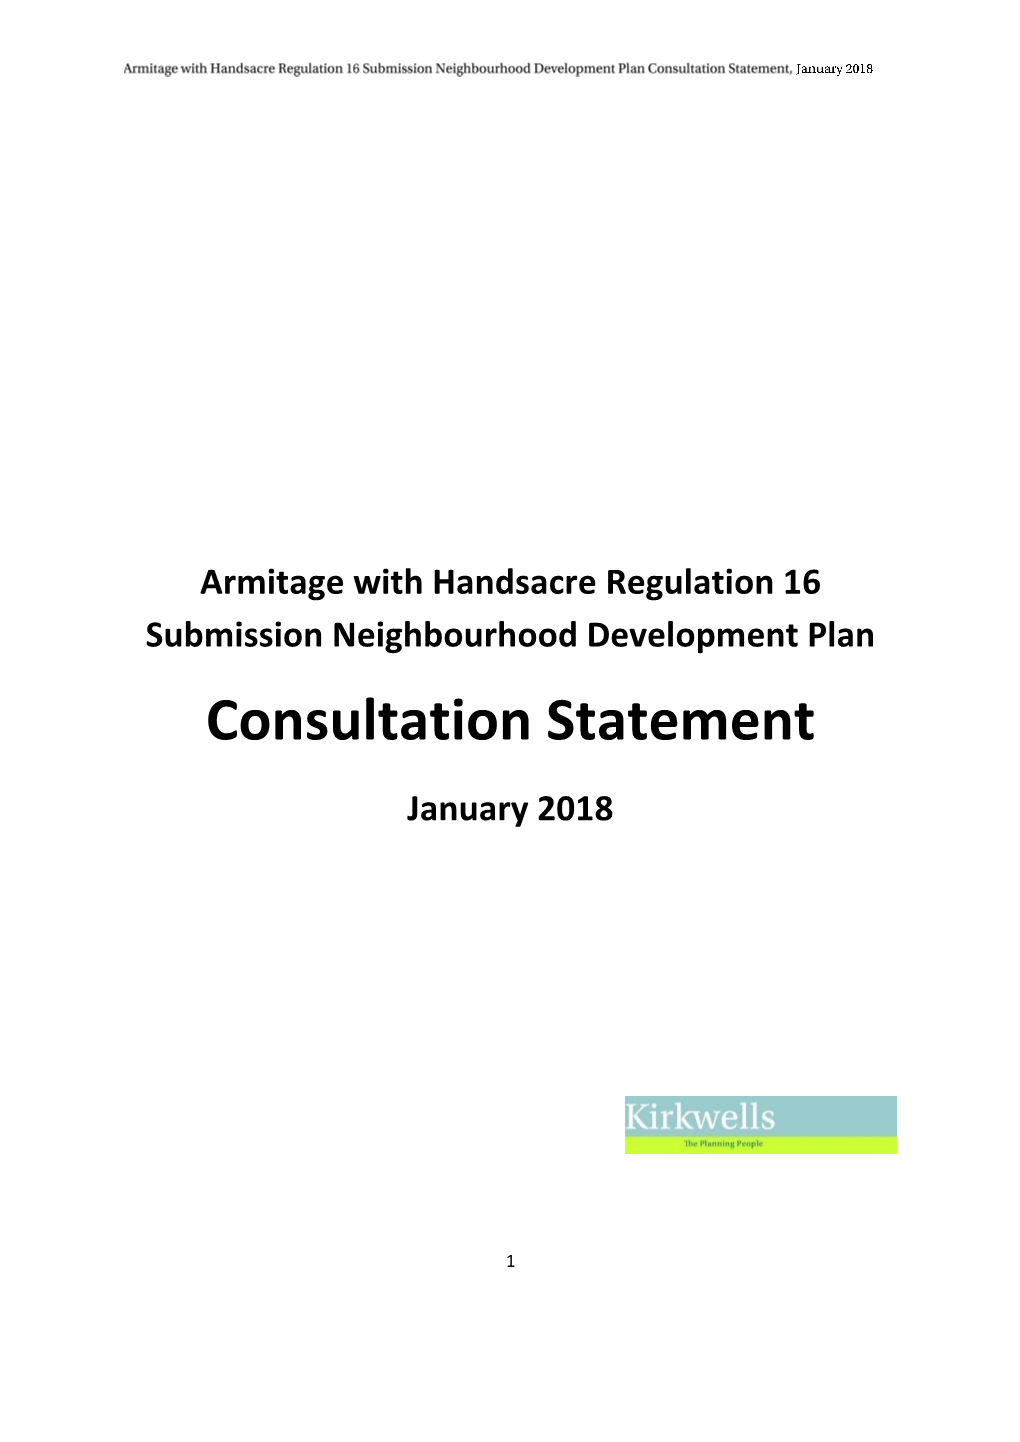 Armitage with Handsacre Consultation Statement